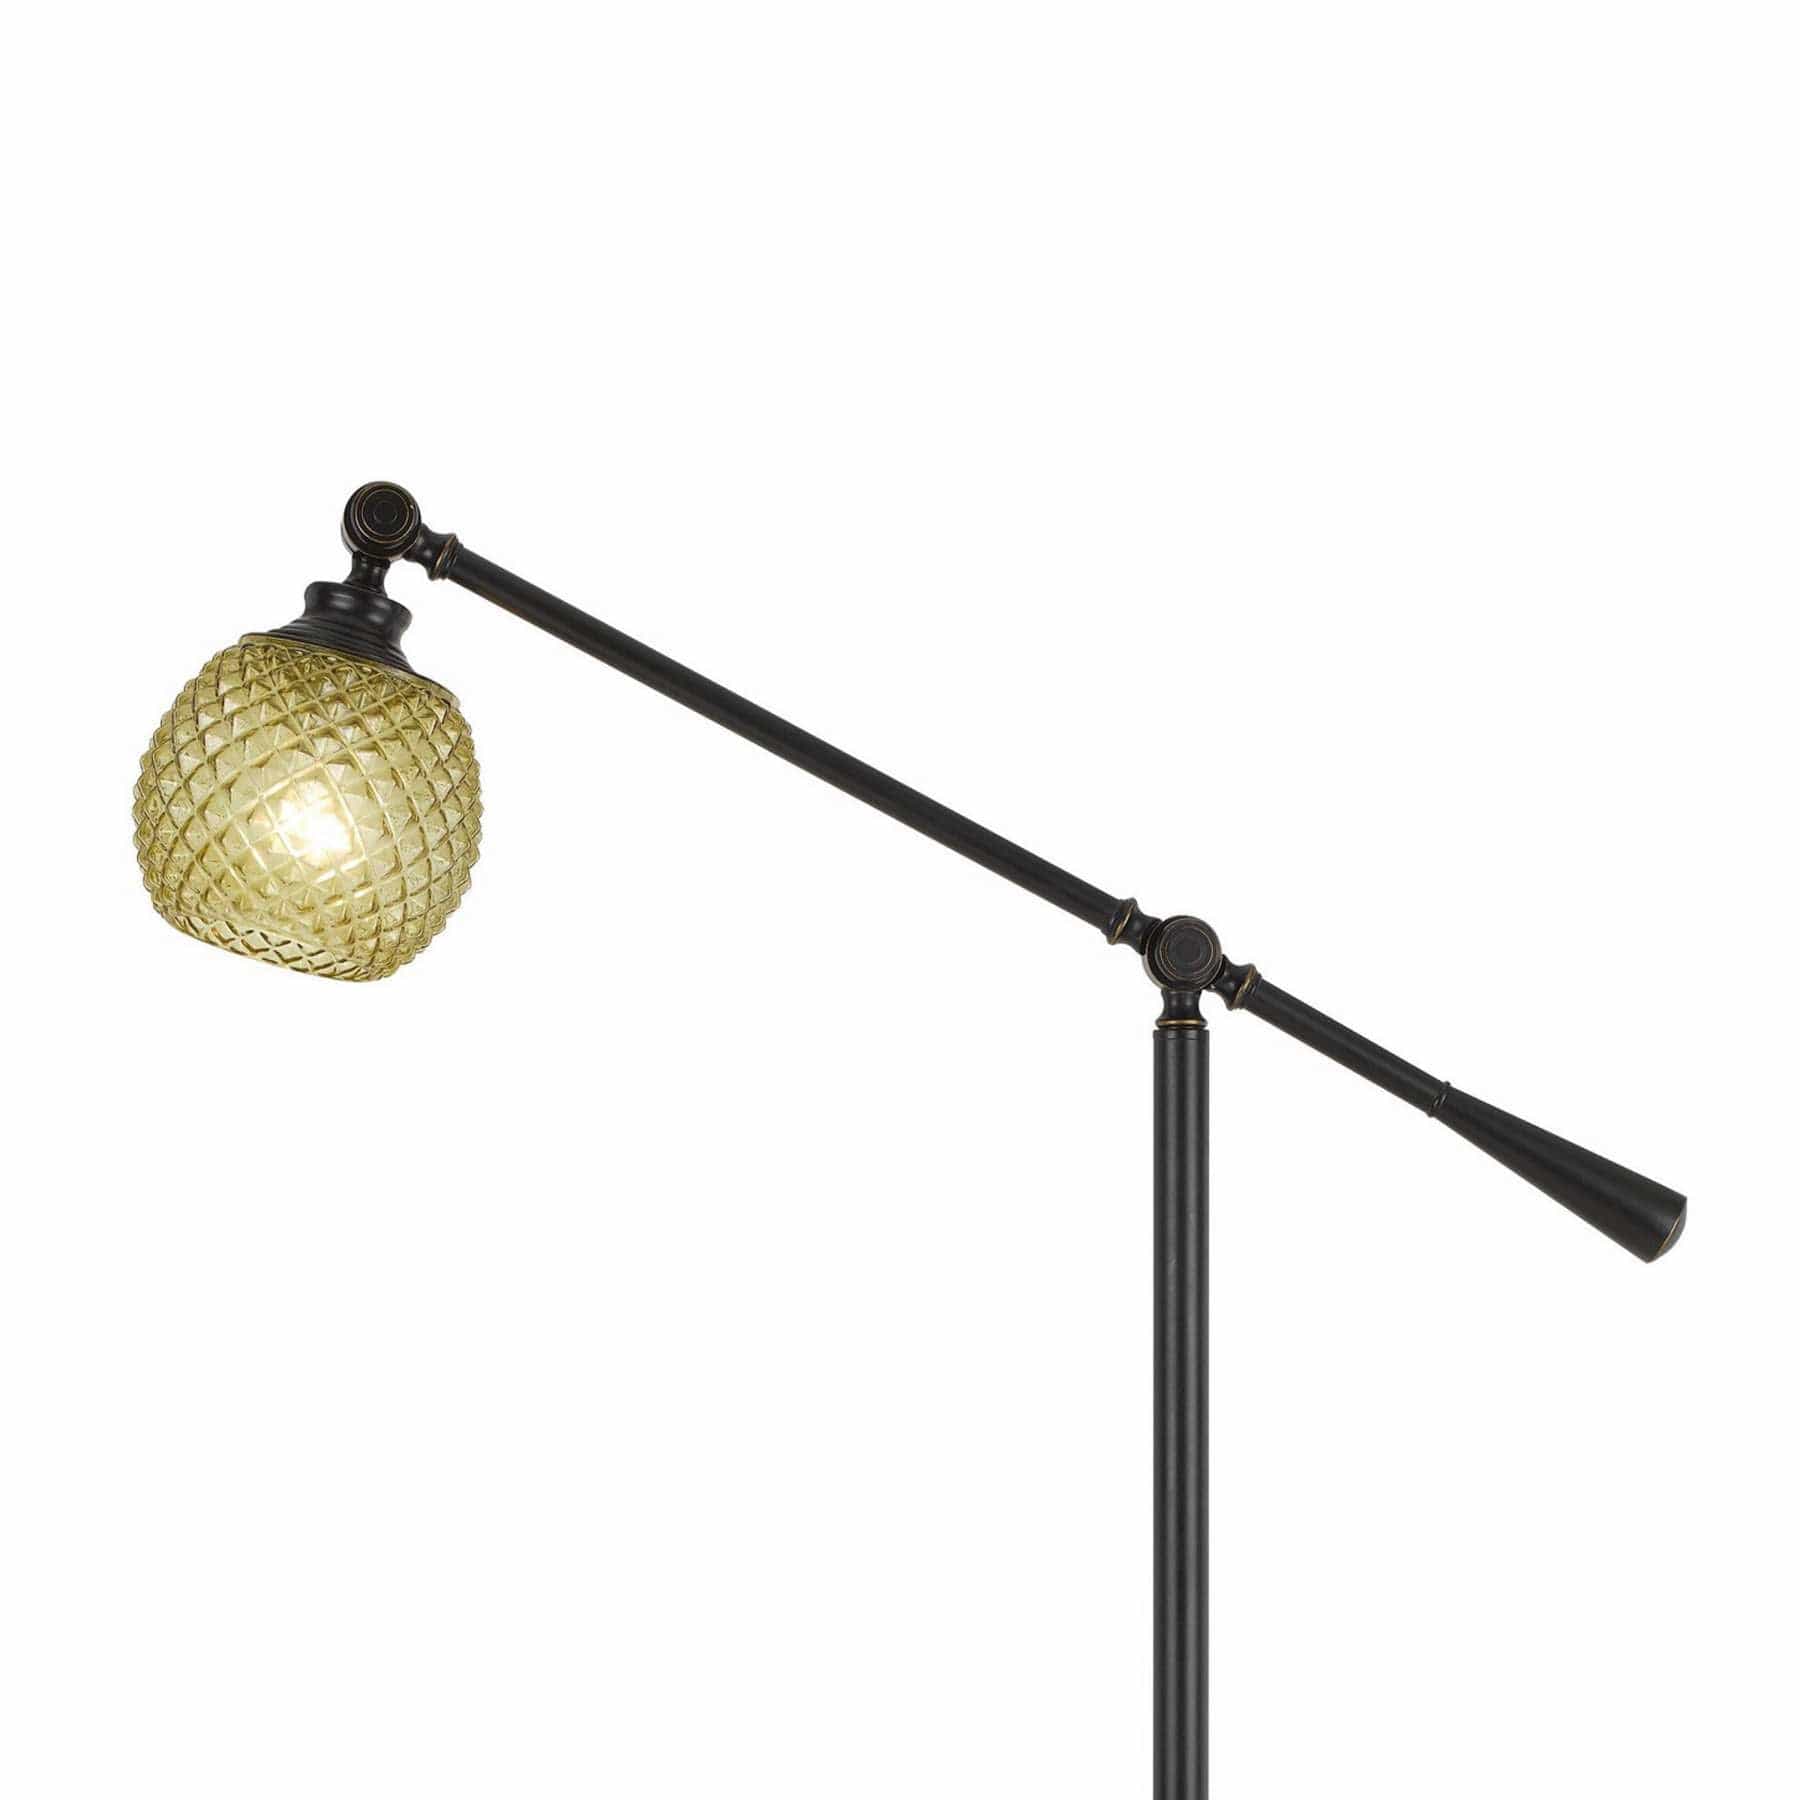 Benzara Metal Body Floor Lamp With Adjustable Arm And Textured Glass Shade, Black By Benzara Floor Lamps BM224890